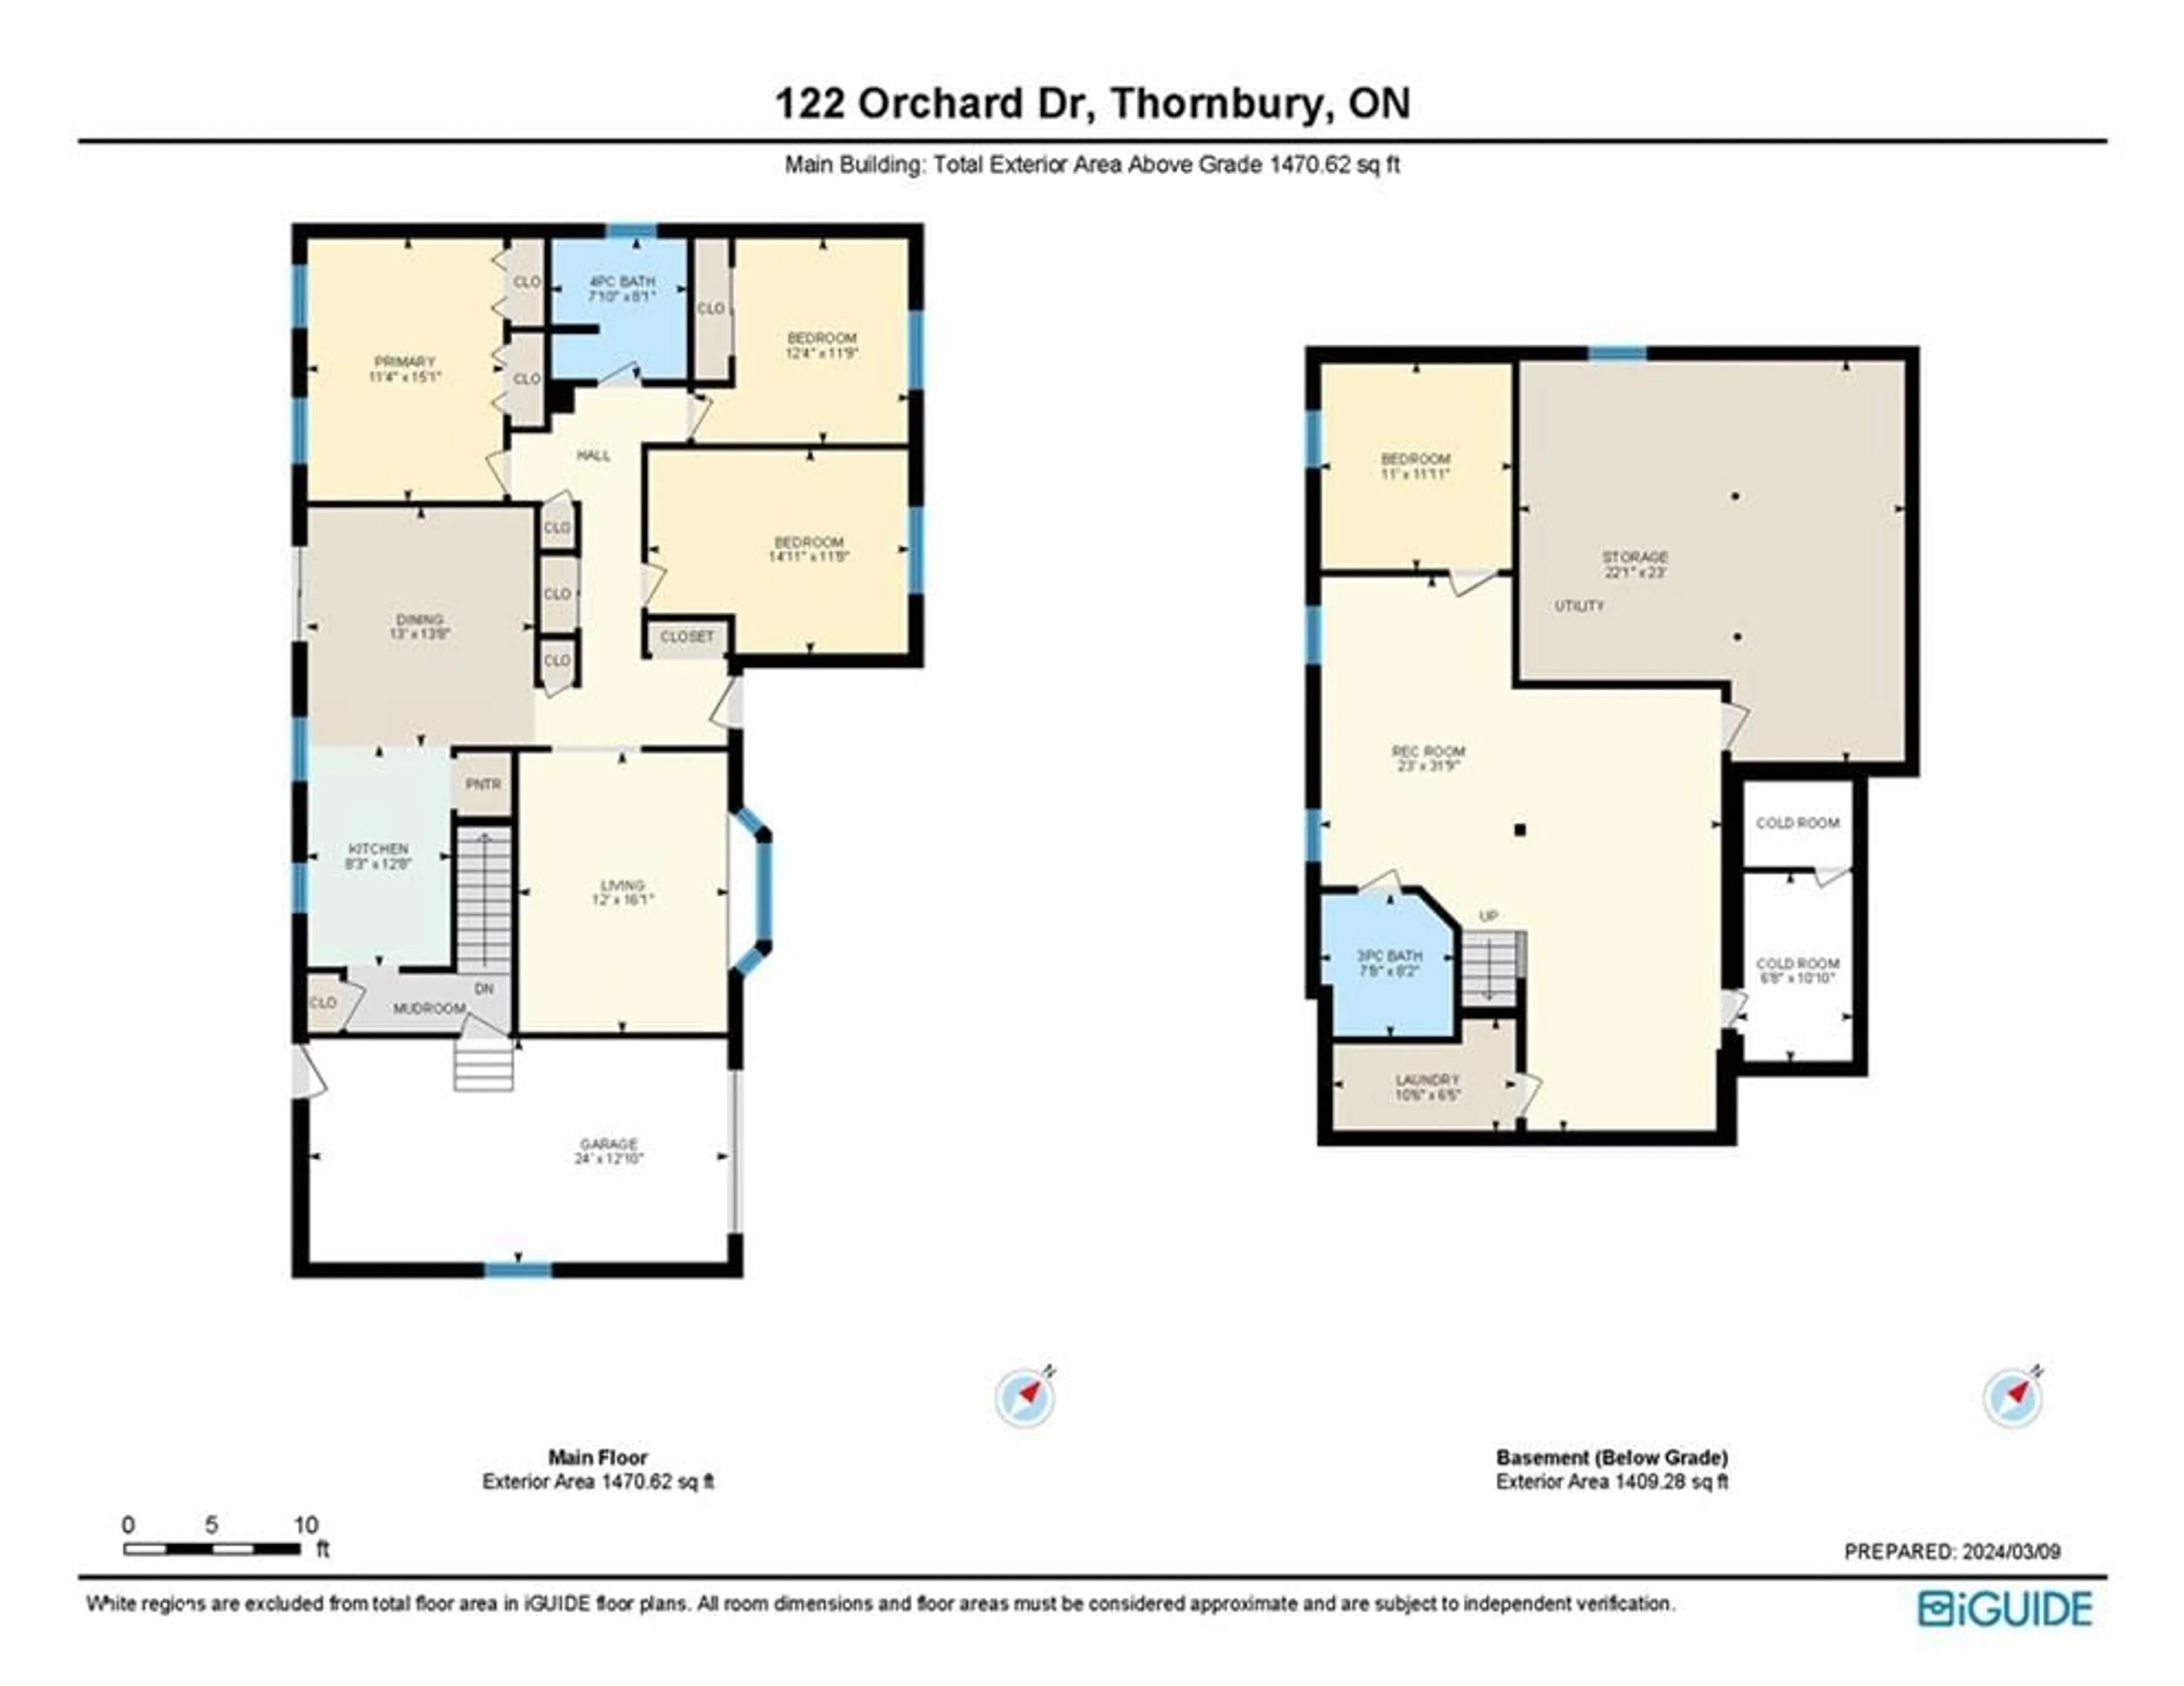 Floor plan for 122 Orchard Dr, Thornbury Ontario N0H 2P0